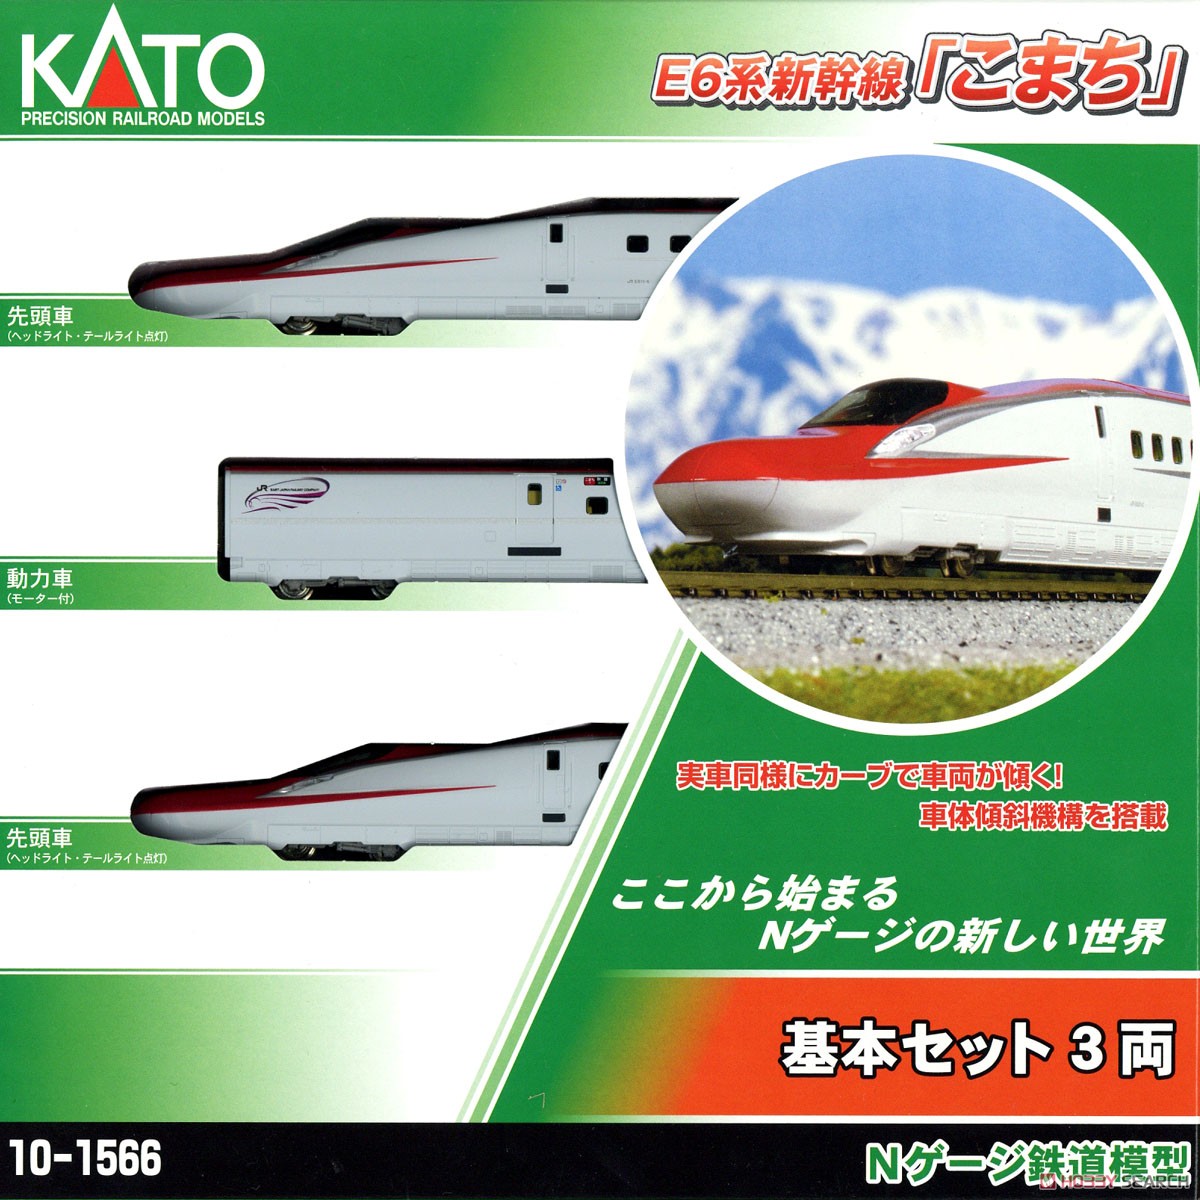 E6系新幹線「こまち」 基本セット (基本・3両セット) (鉄道模型) パッケージ1